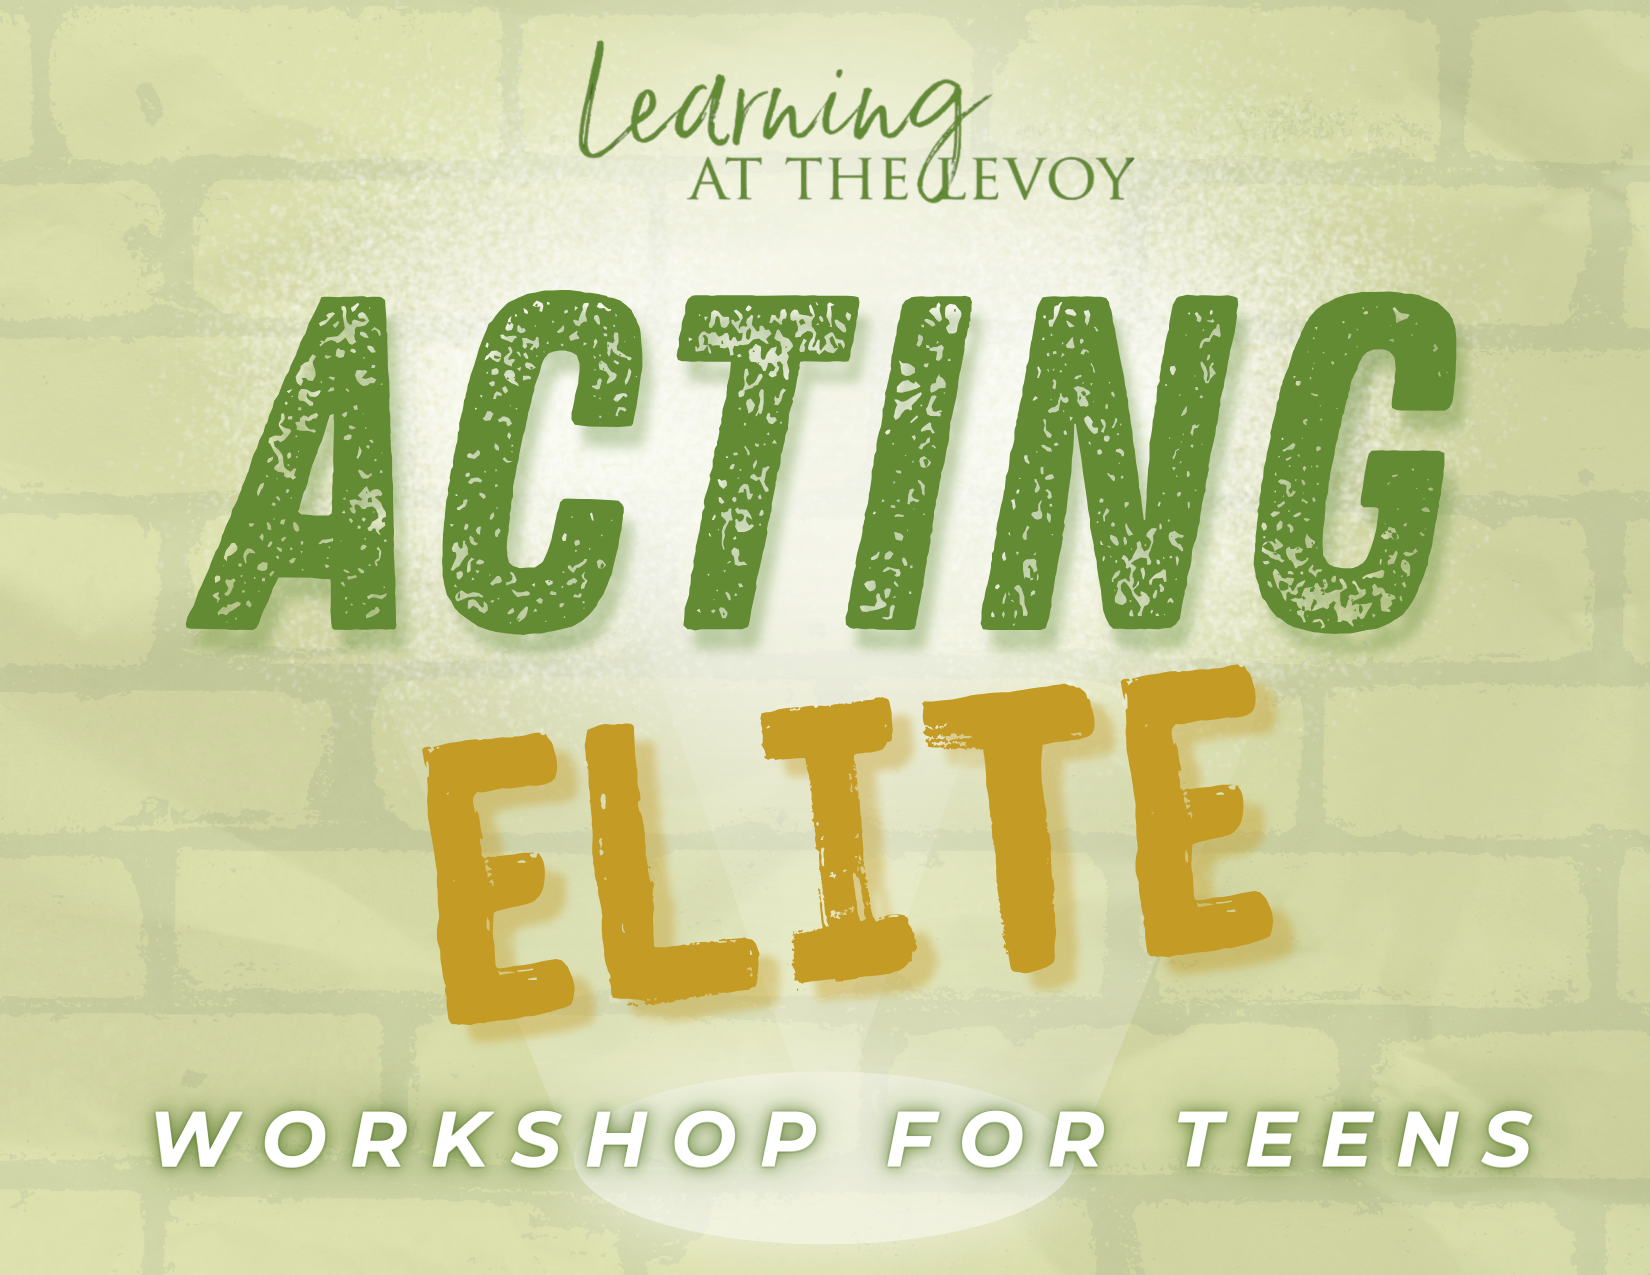 Acting Elite workshop for teens